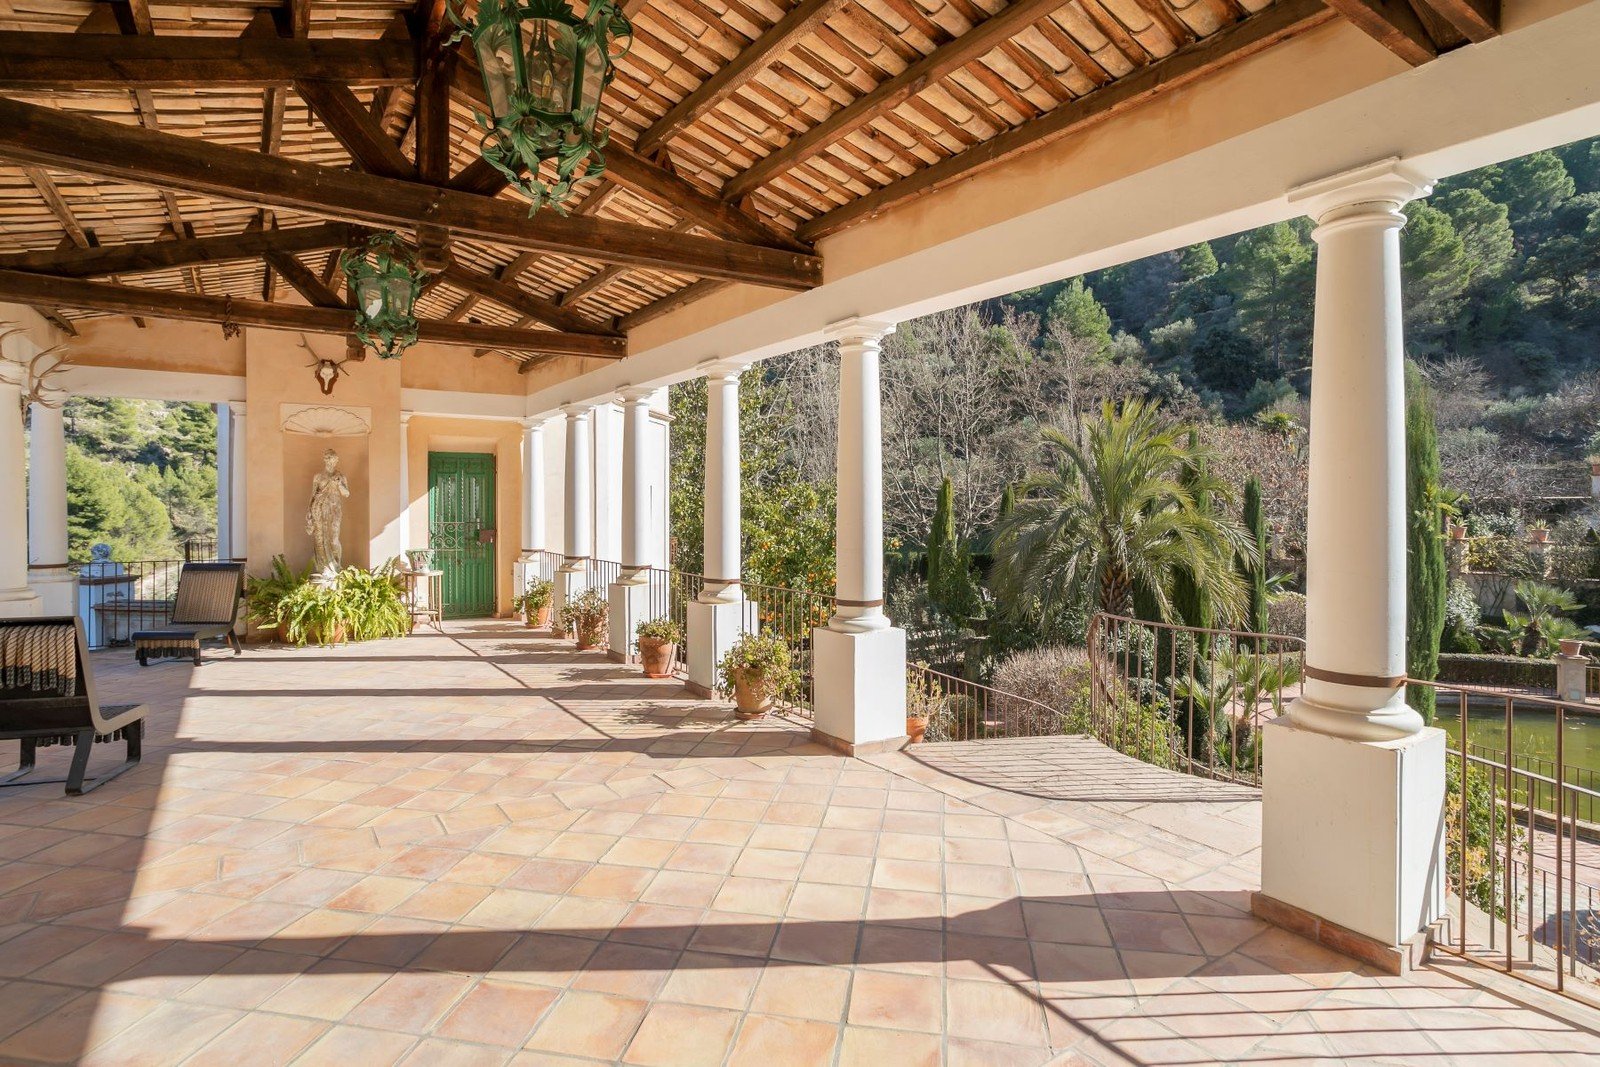 Francis York Stunning Hacienda in the Costa Blanca Hills Near Alicante, Spain 00007.jpeg